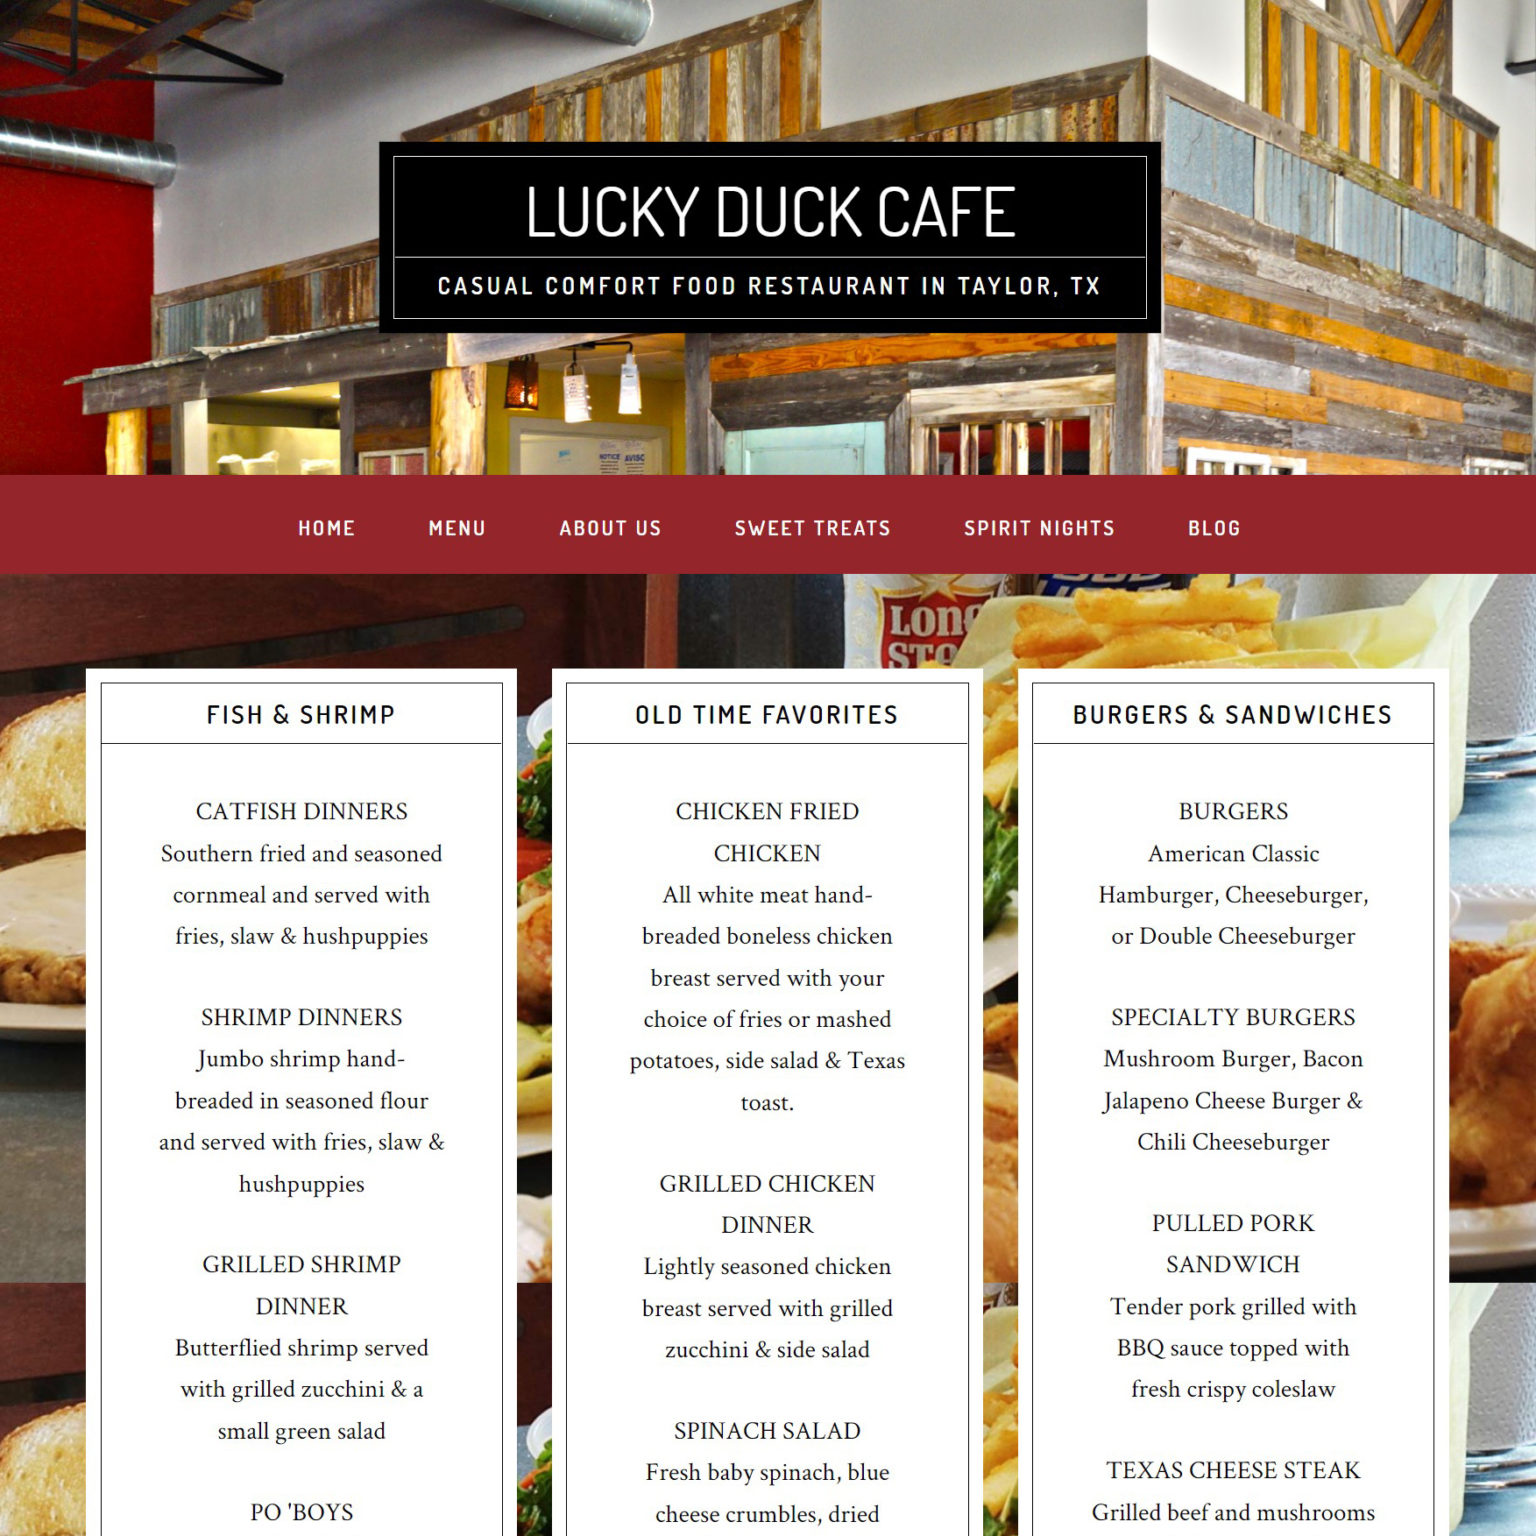 restaurant wordpress website